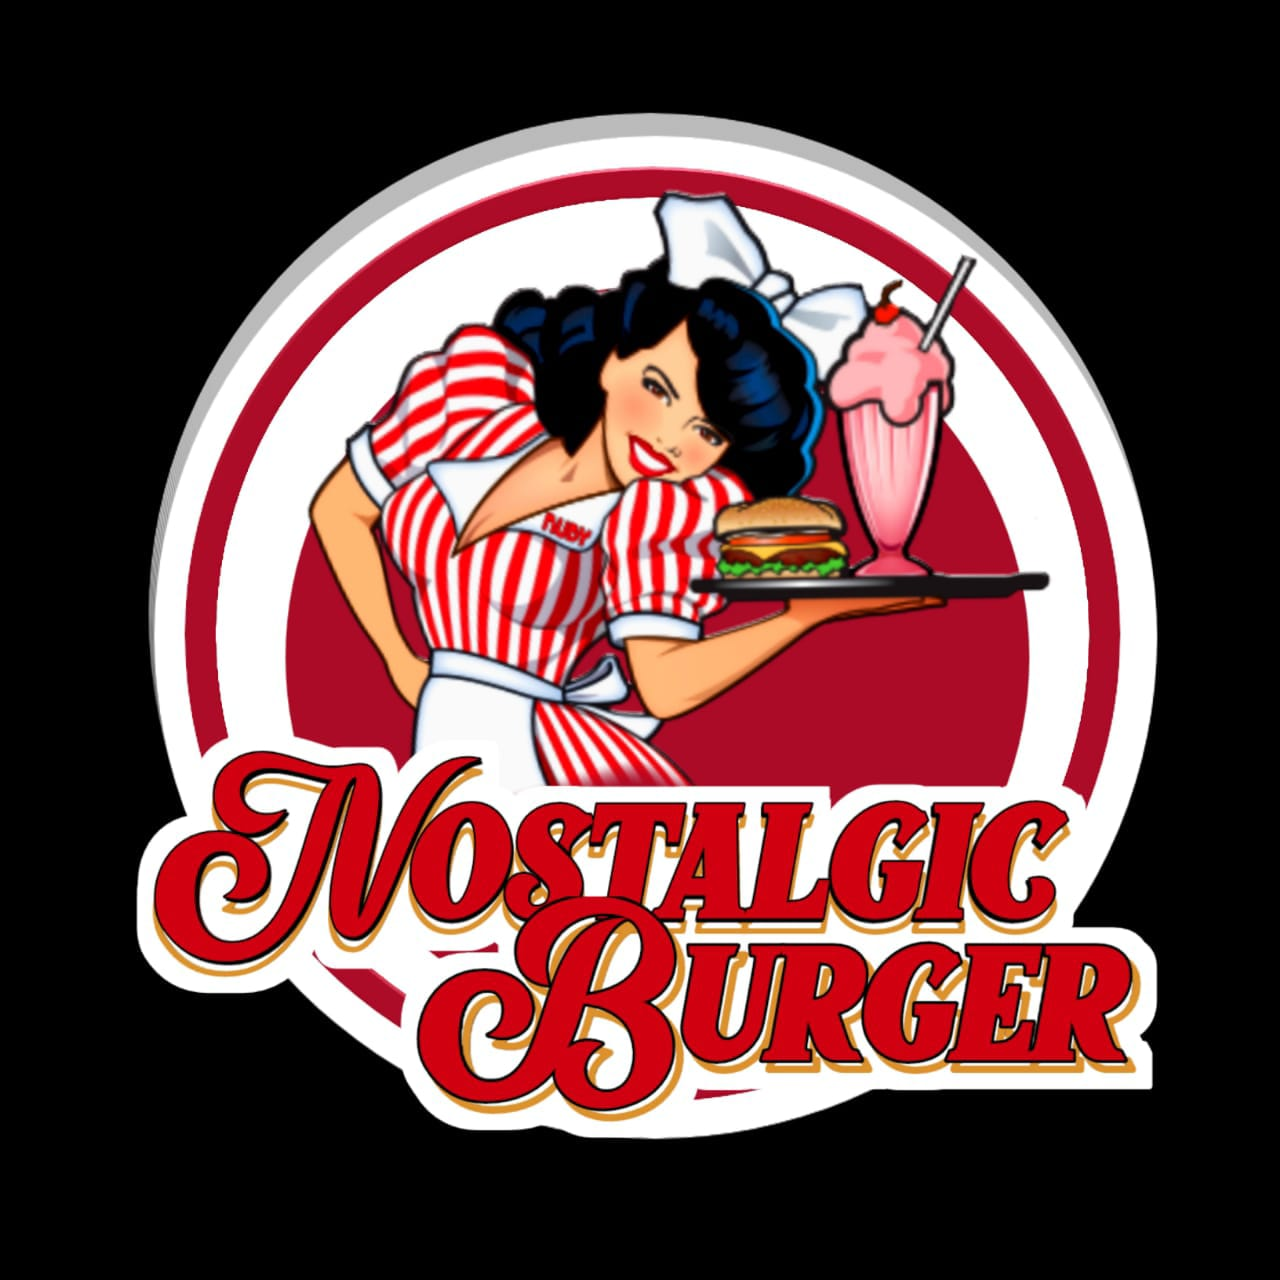 Nostalgic Burger